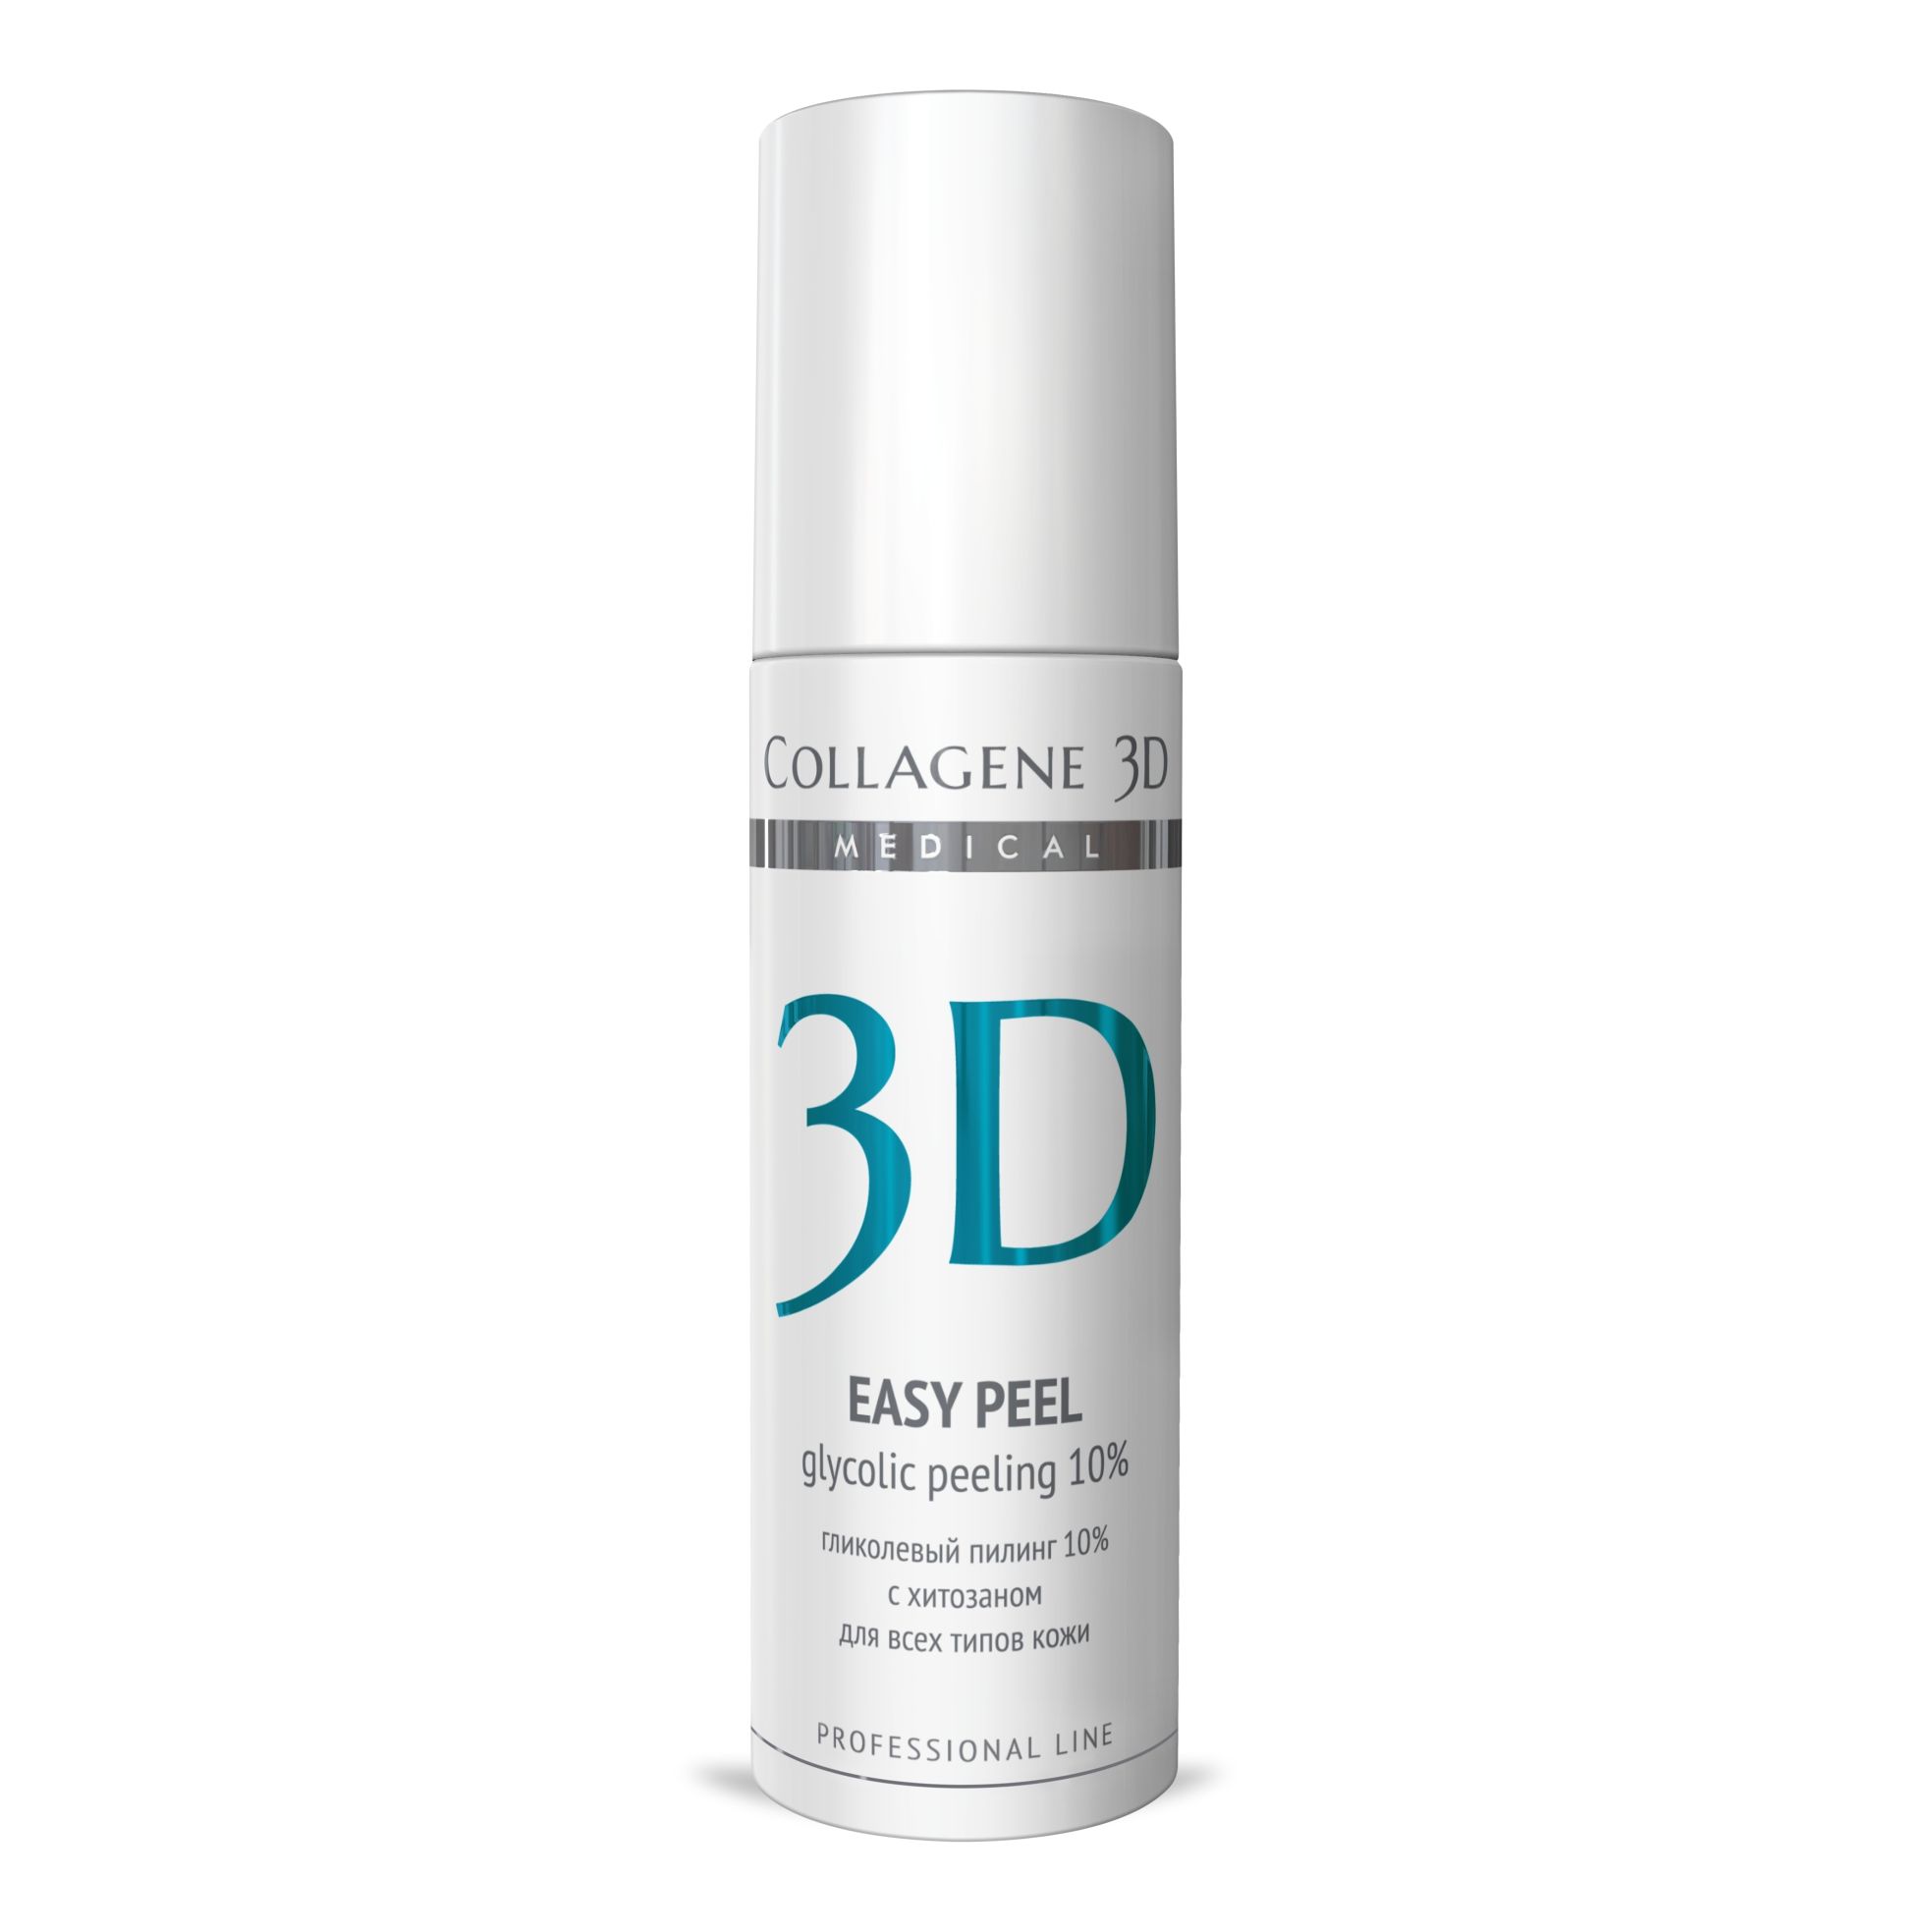 Пилинг для лица Medical Collagene 3D Easy Peel Glicolic Peeling 10% 130 мл medical collagene 3d пилинг с папаином и экстрактом шисо natural peel 150 гр